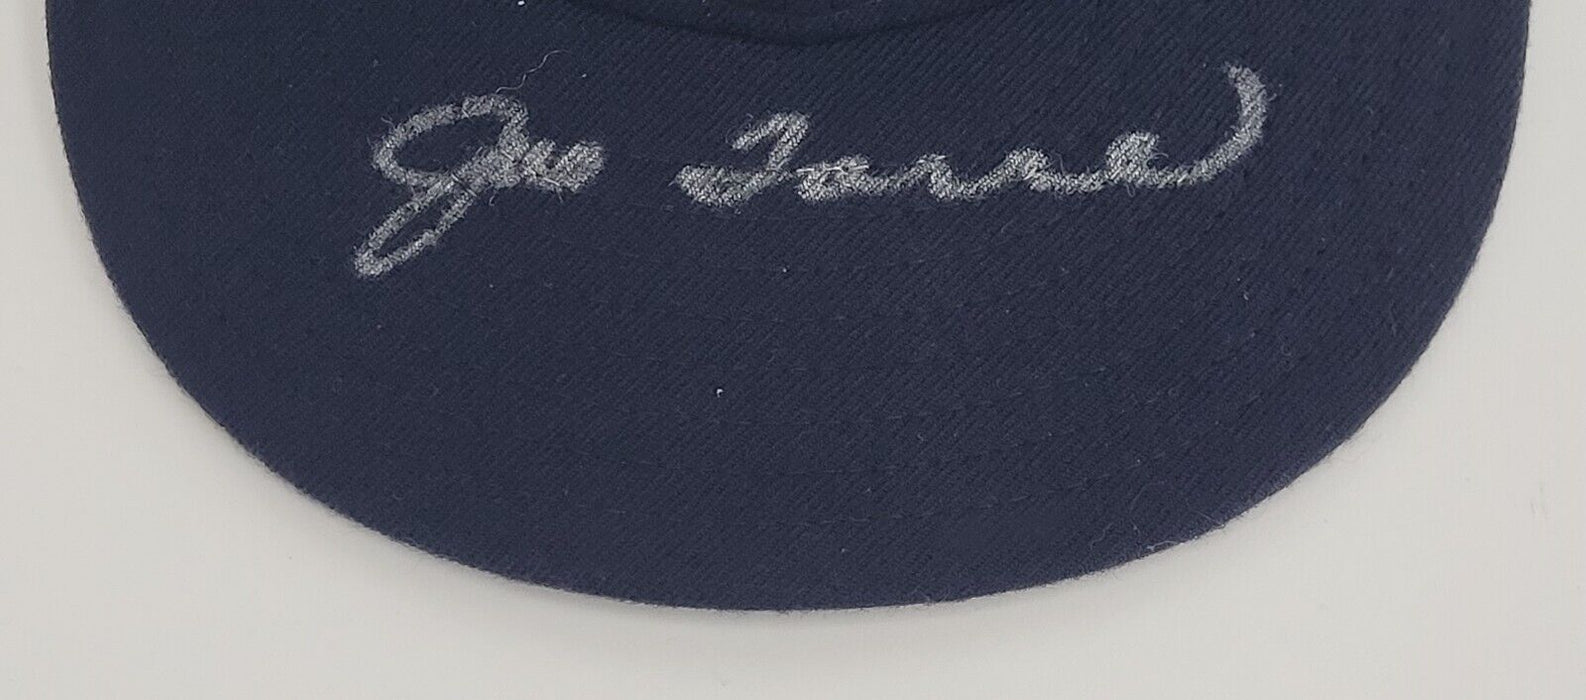 Joe Torre Signed New York Yankees 1996 World Series Hat Beckett Certified